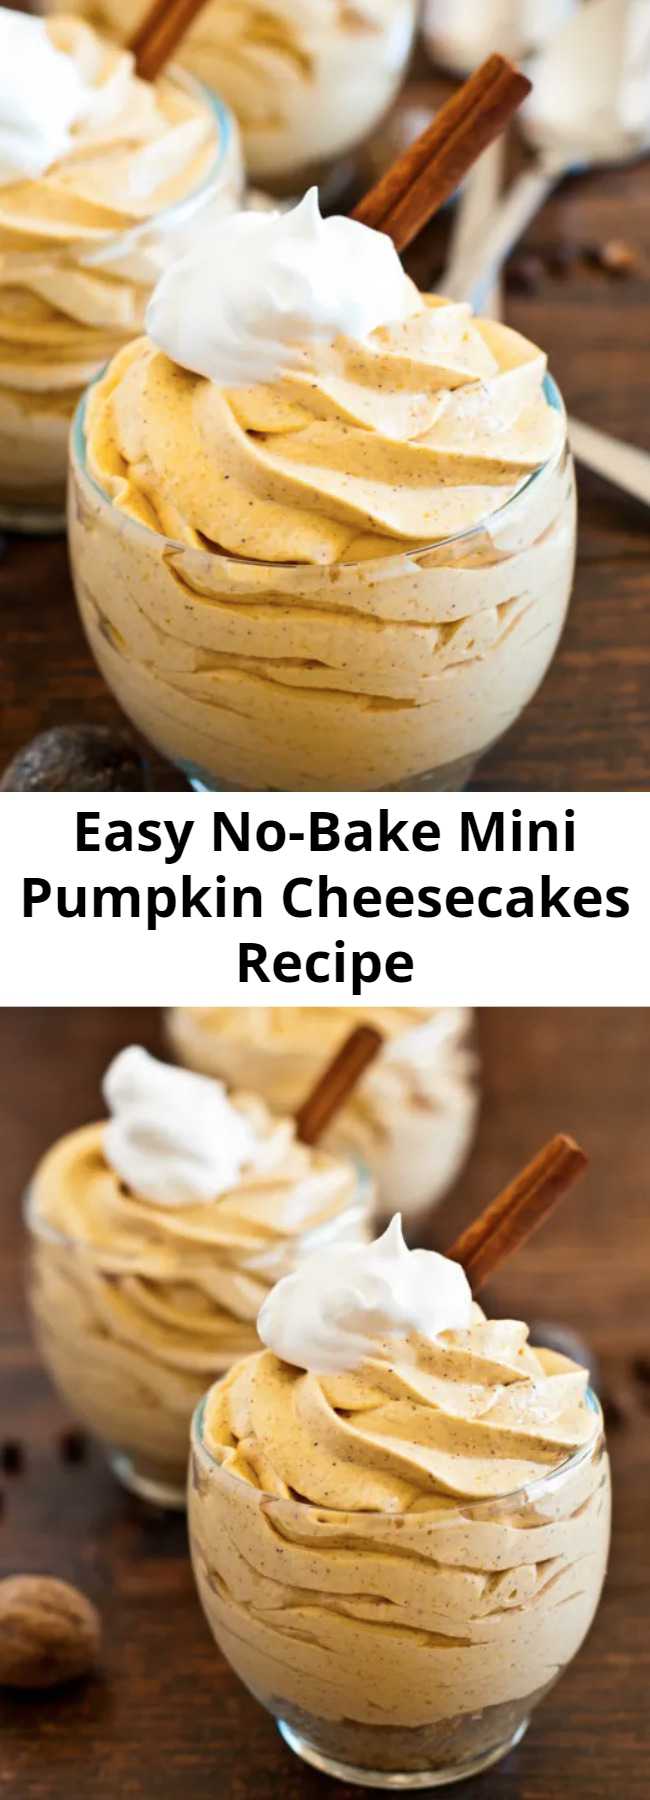 Easy No-Bake Mini Pumpkin Cheesecakes Recipe - These No-Bake Mini Pumpkin Cheesecakes are easy to make and so delicious! #PumpkinRecipe #pumpkin #cheesecake #FallDesserts